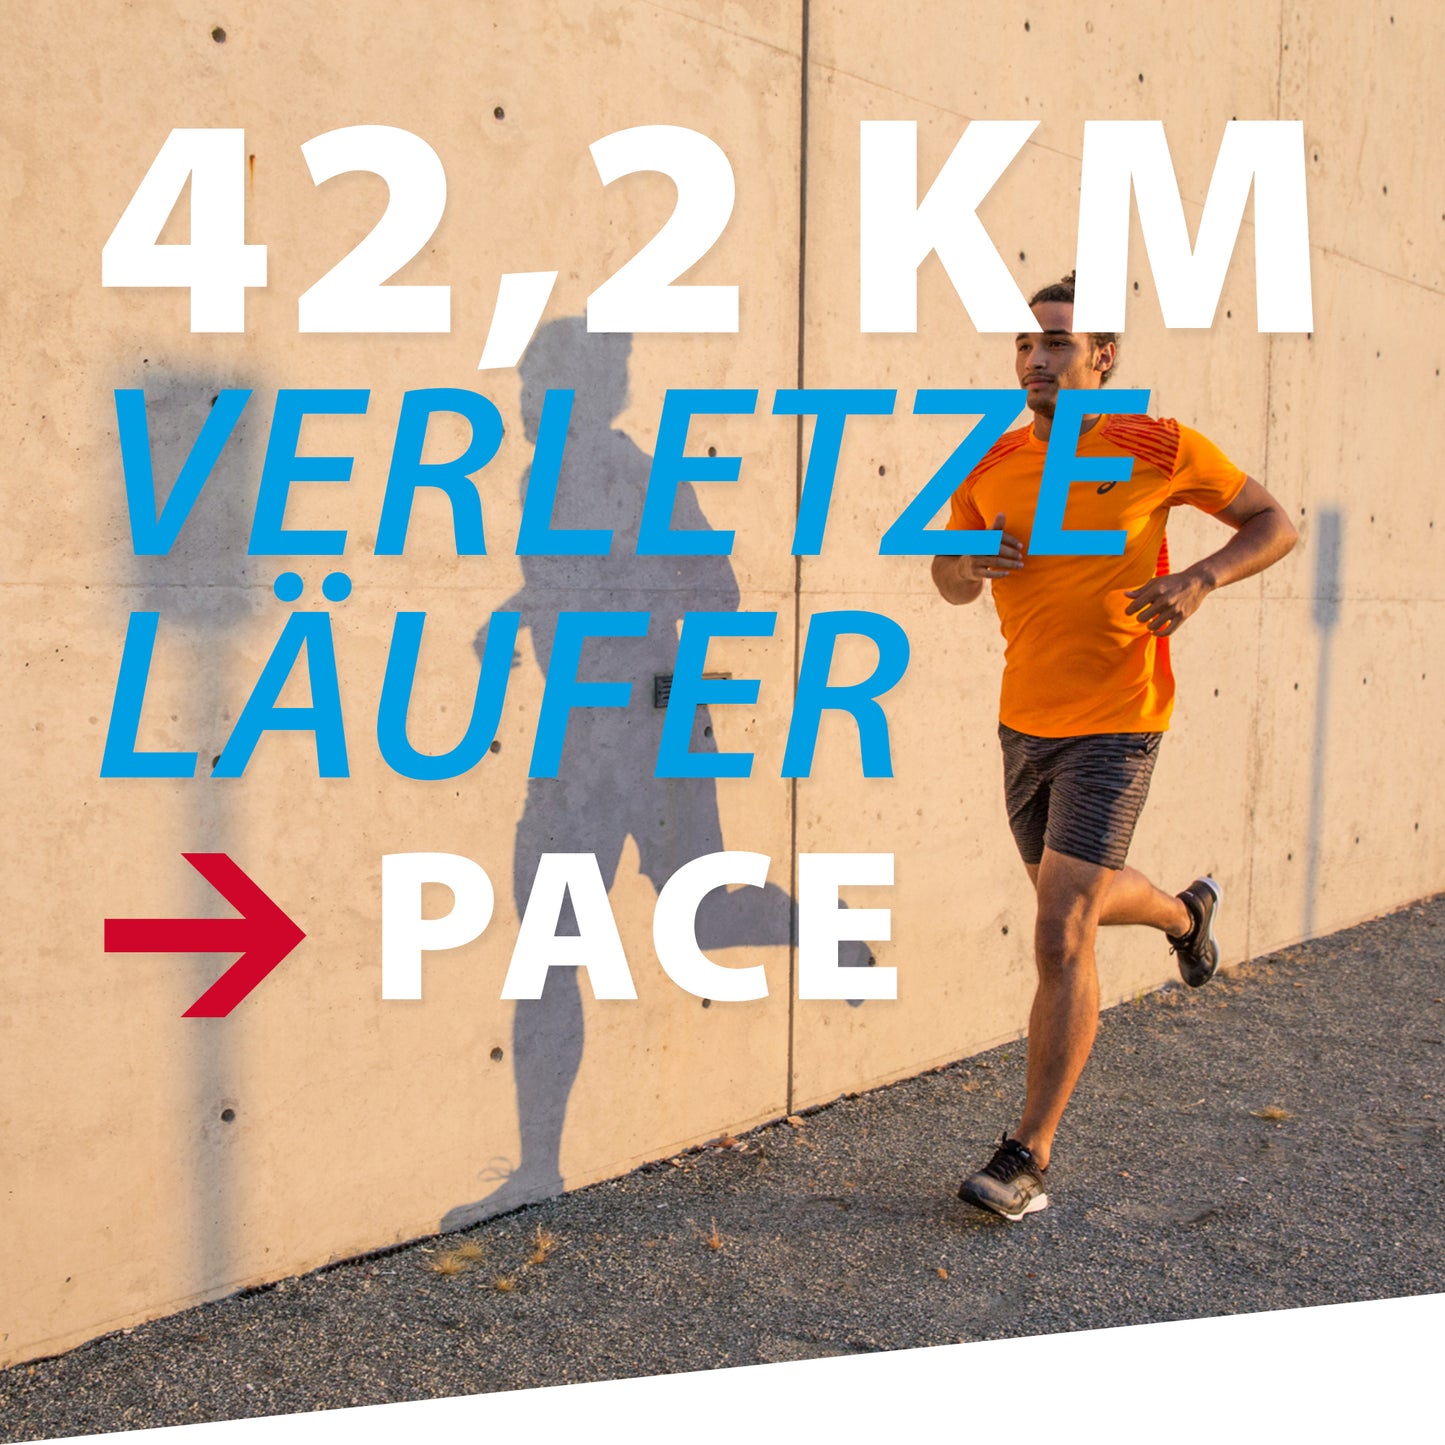 TRAININGSPLAN: 42,2 km | Verletzungsanfällige Läufer | Pace